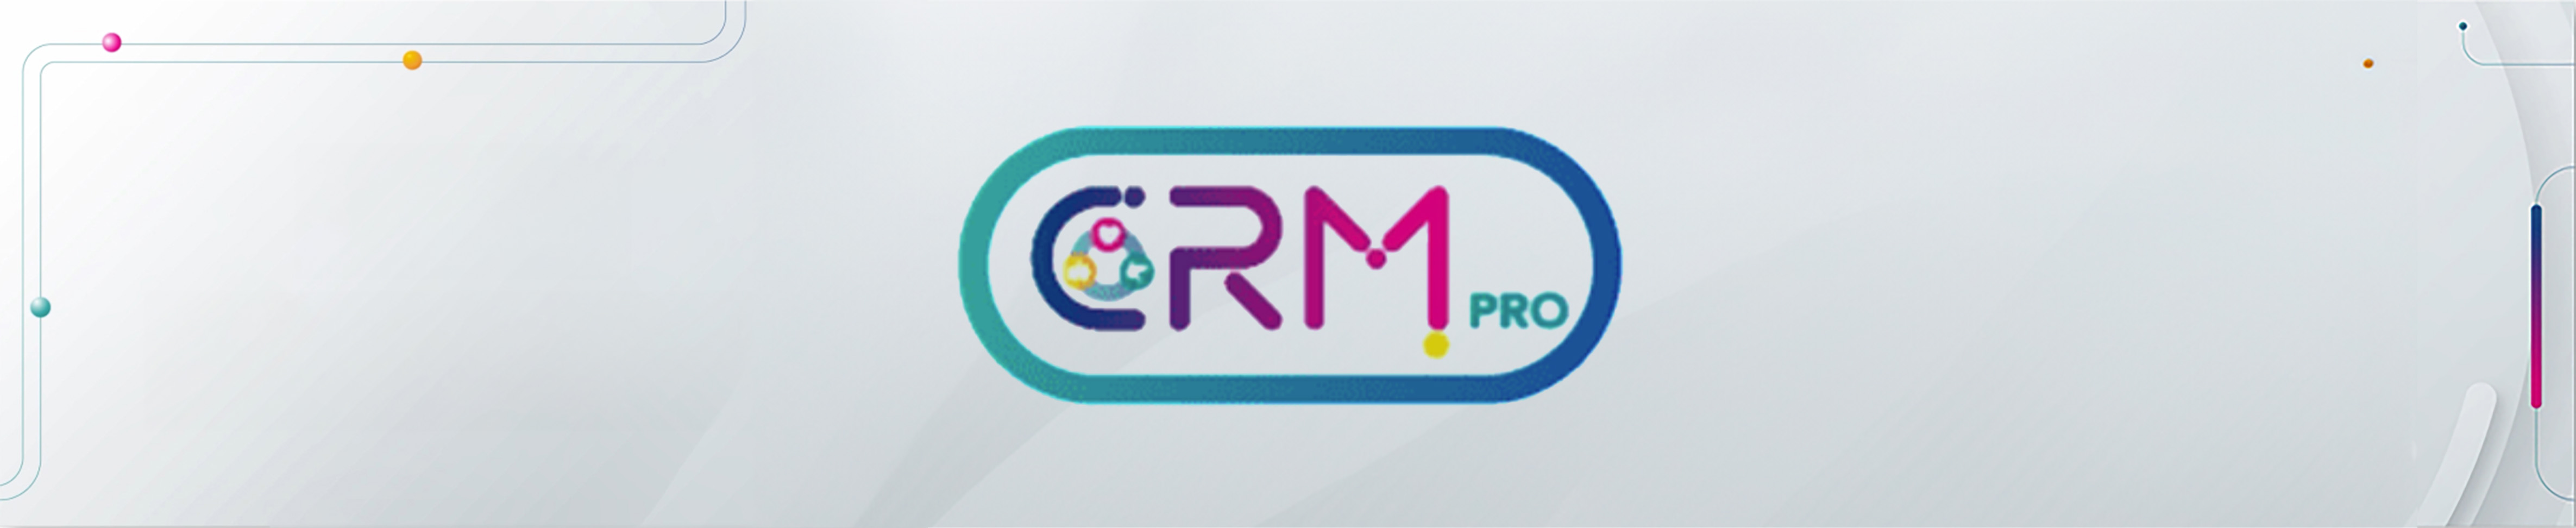 CRM Pro